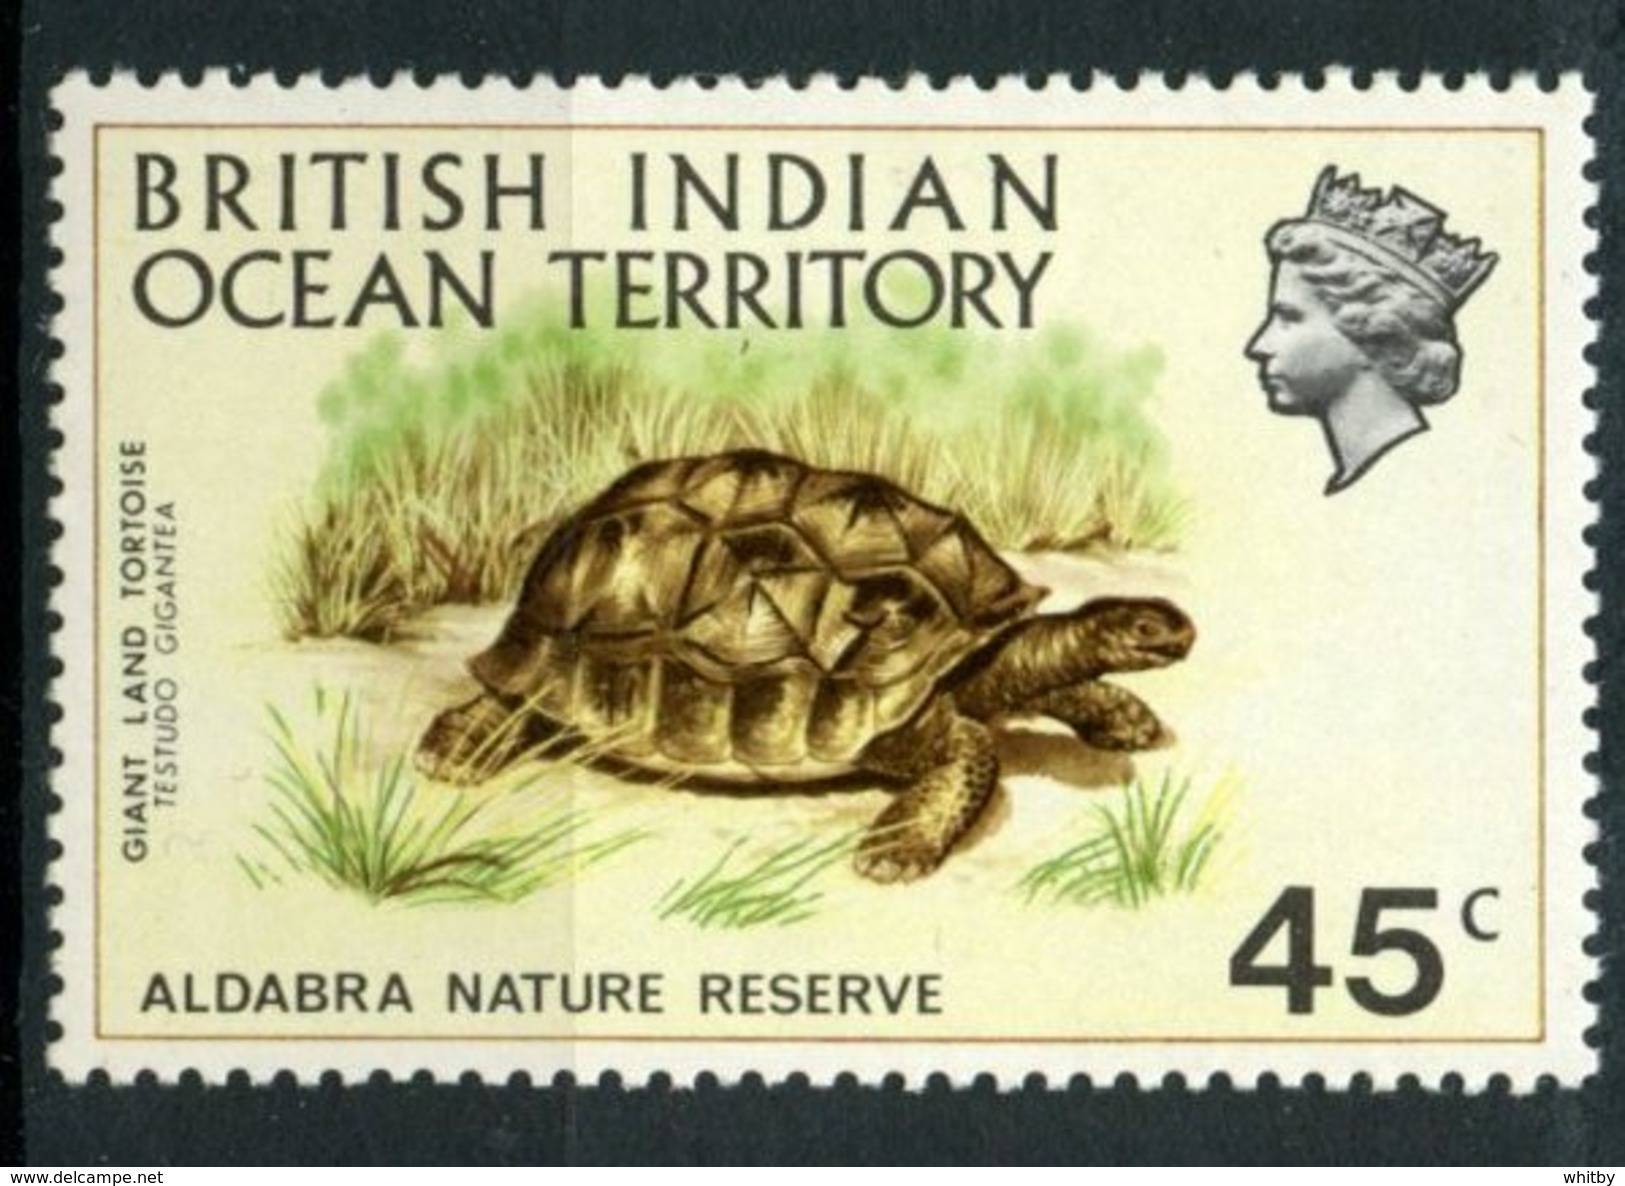 British Indian Ocean Territory 1971 45c Tortoise Issue  #39 MH - Territorio Británico Del Océano Índico